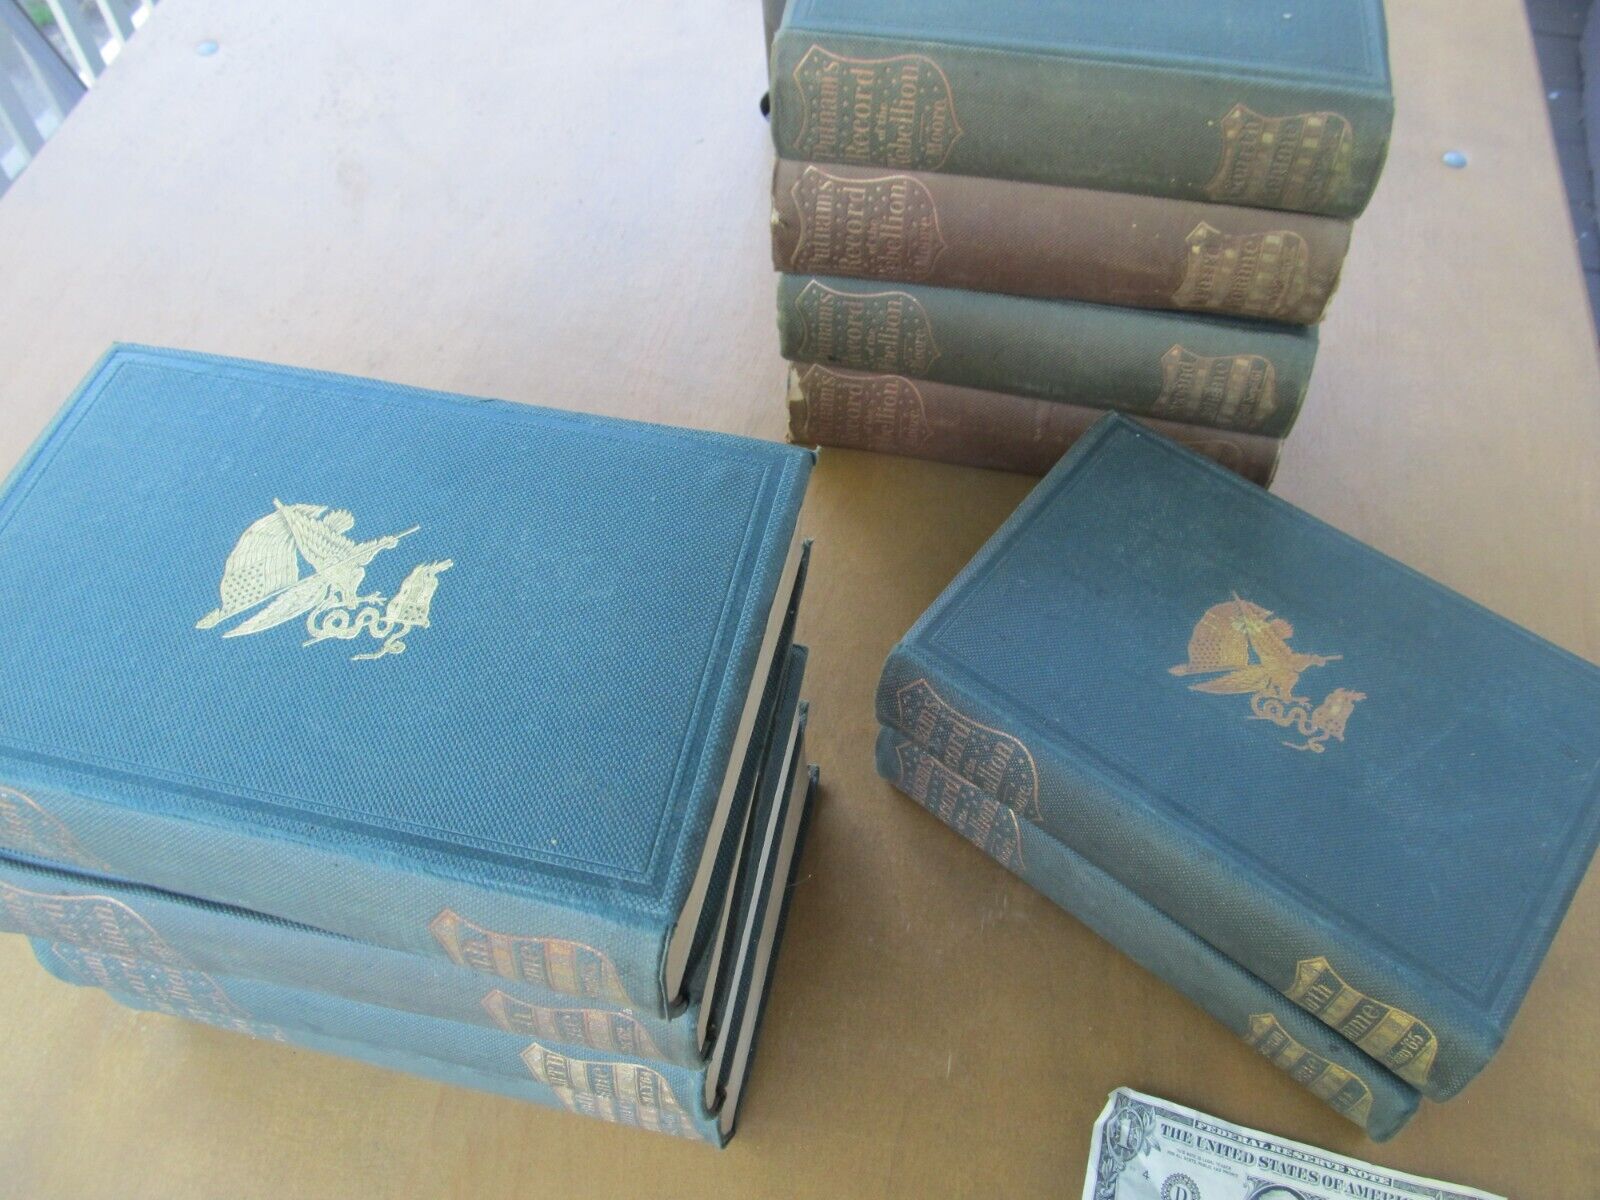 Rare COMPLETE 10 Vol 6000 PG Putnam CONTEMPORARY 1861 Civil War History Book Set